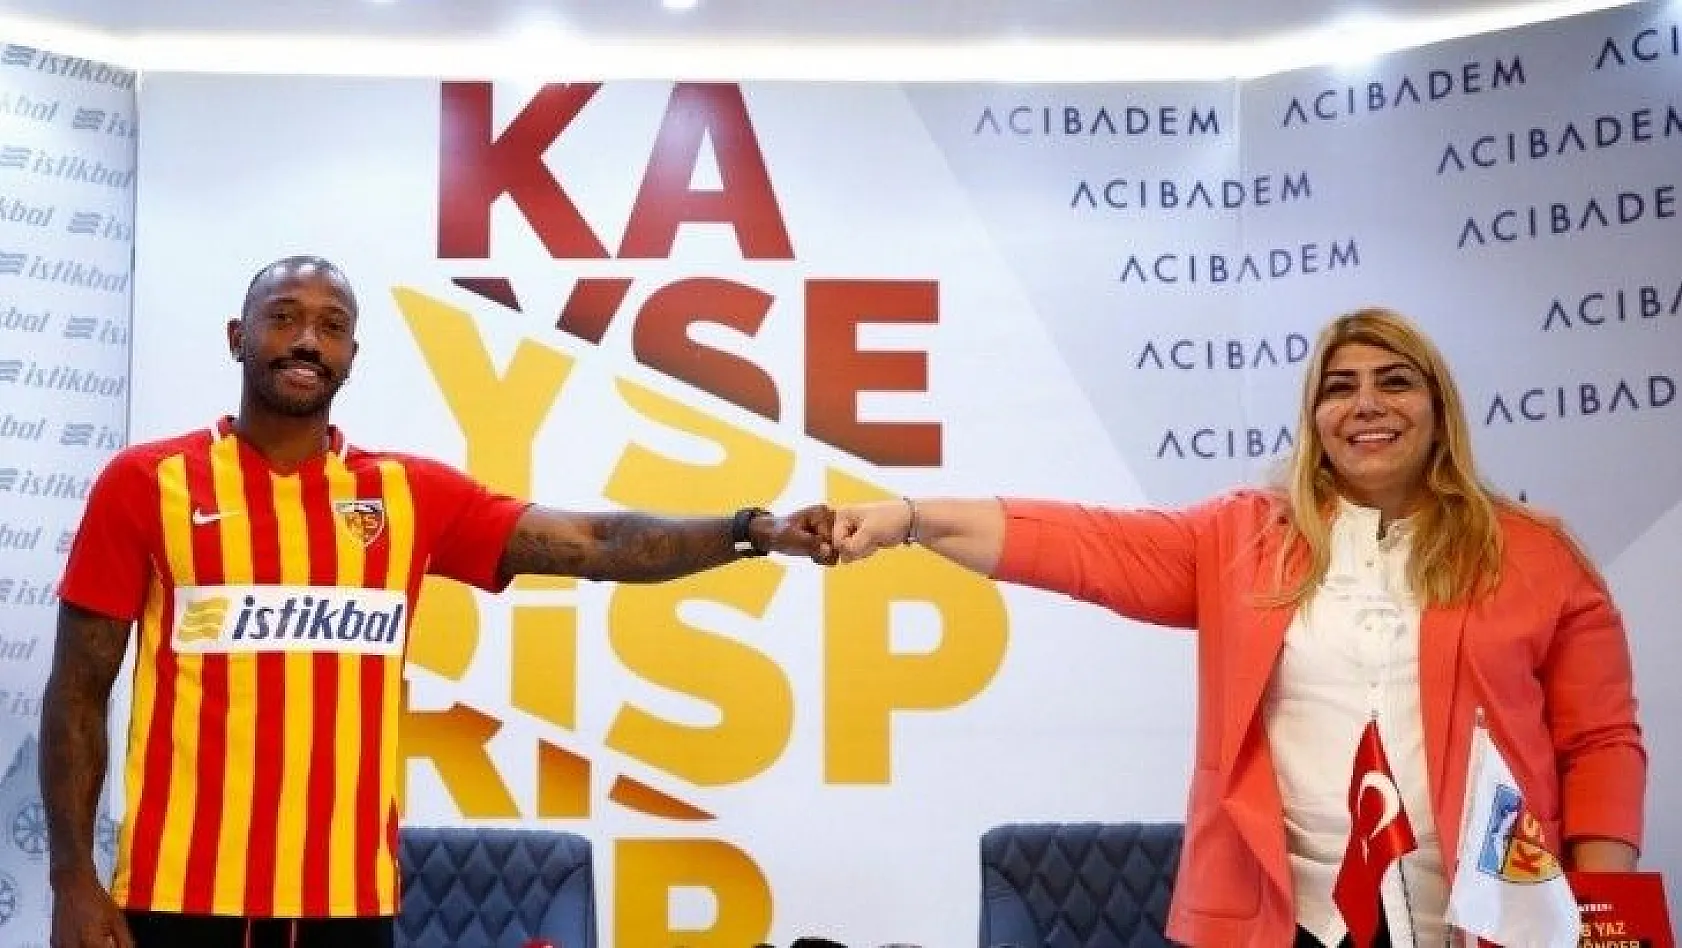 Kayserispor'da 3 futbolcu kadro dışı